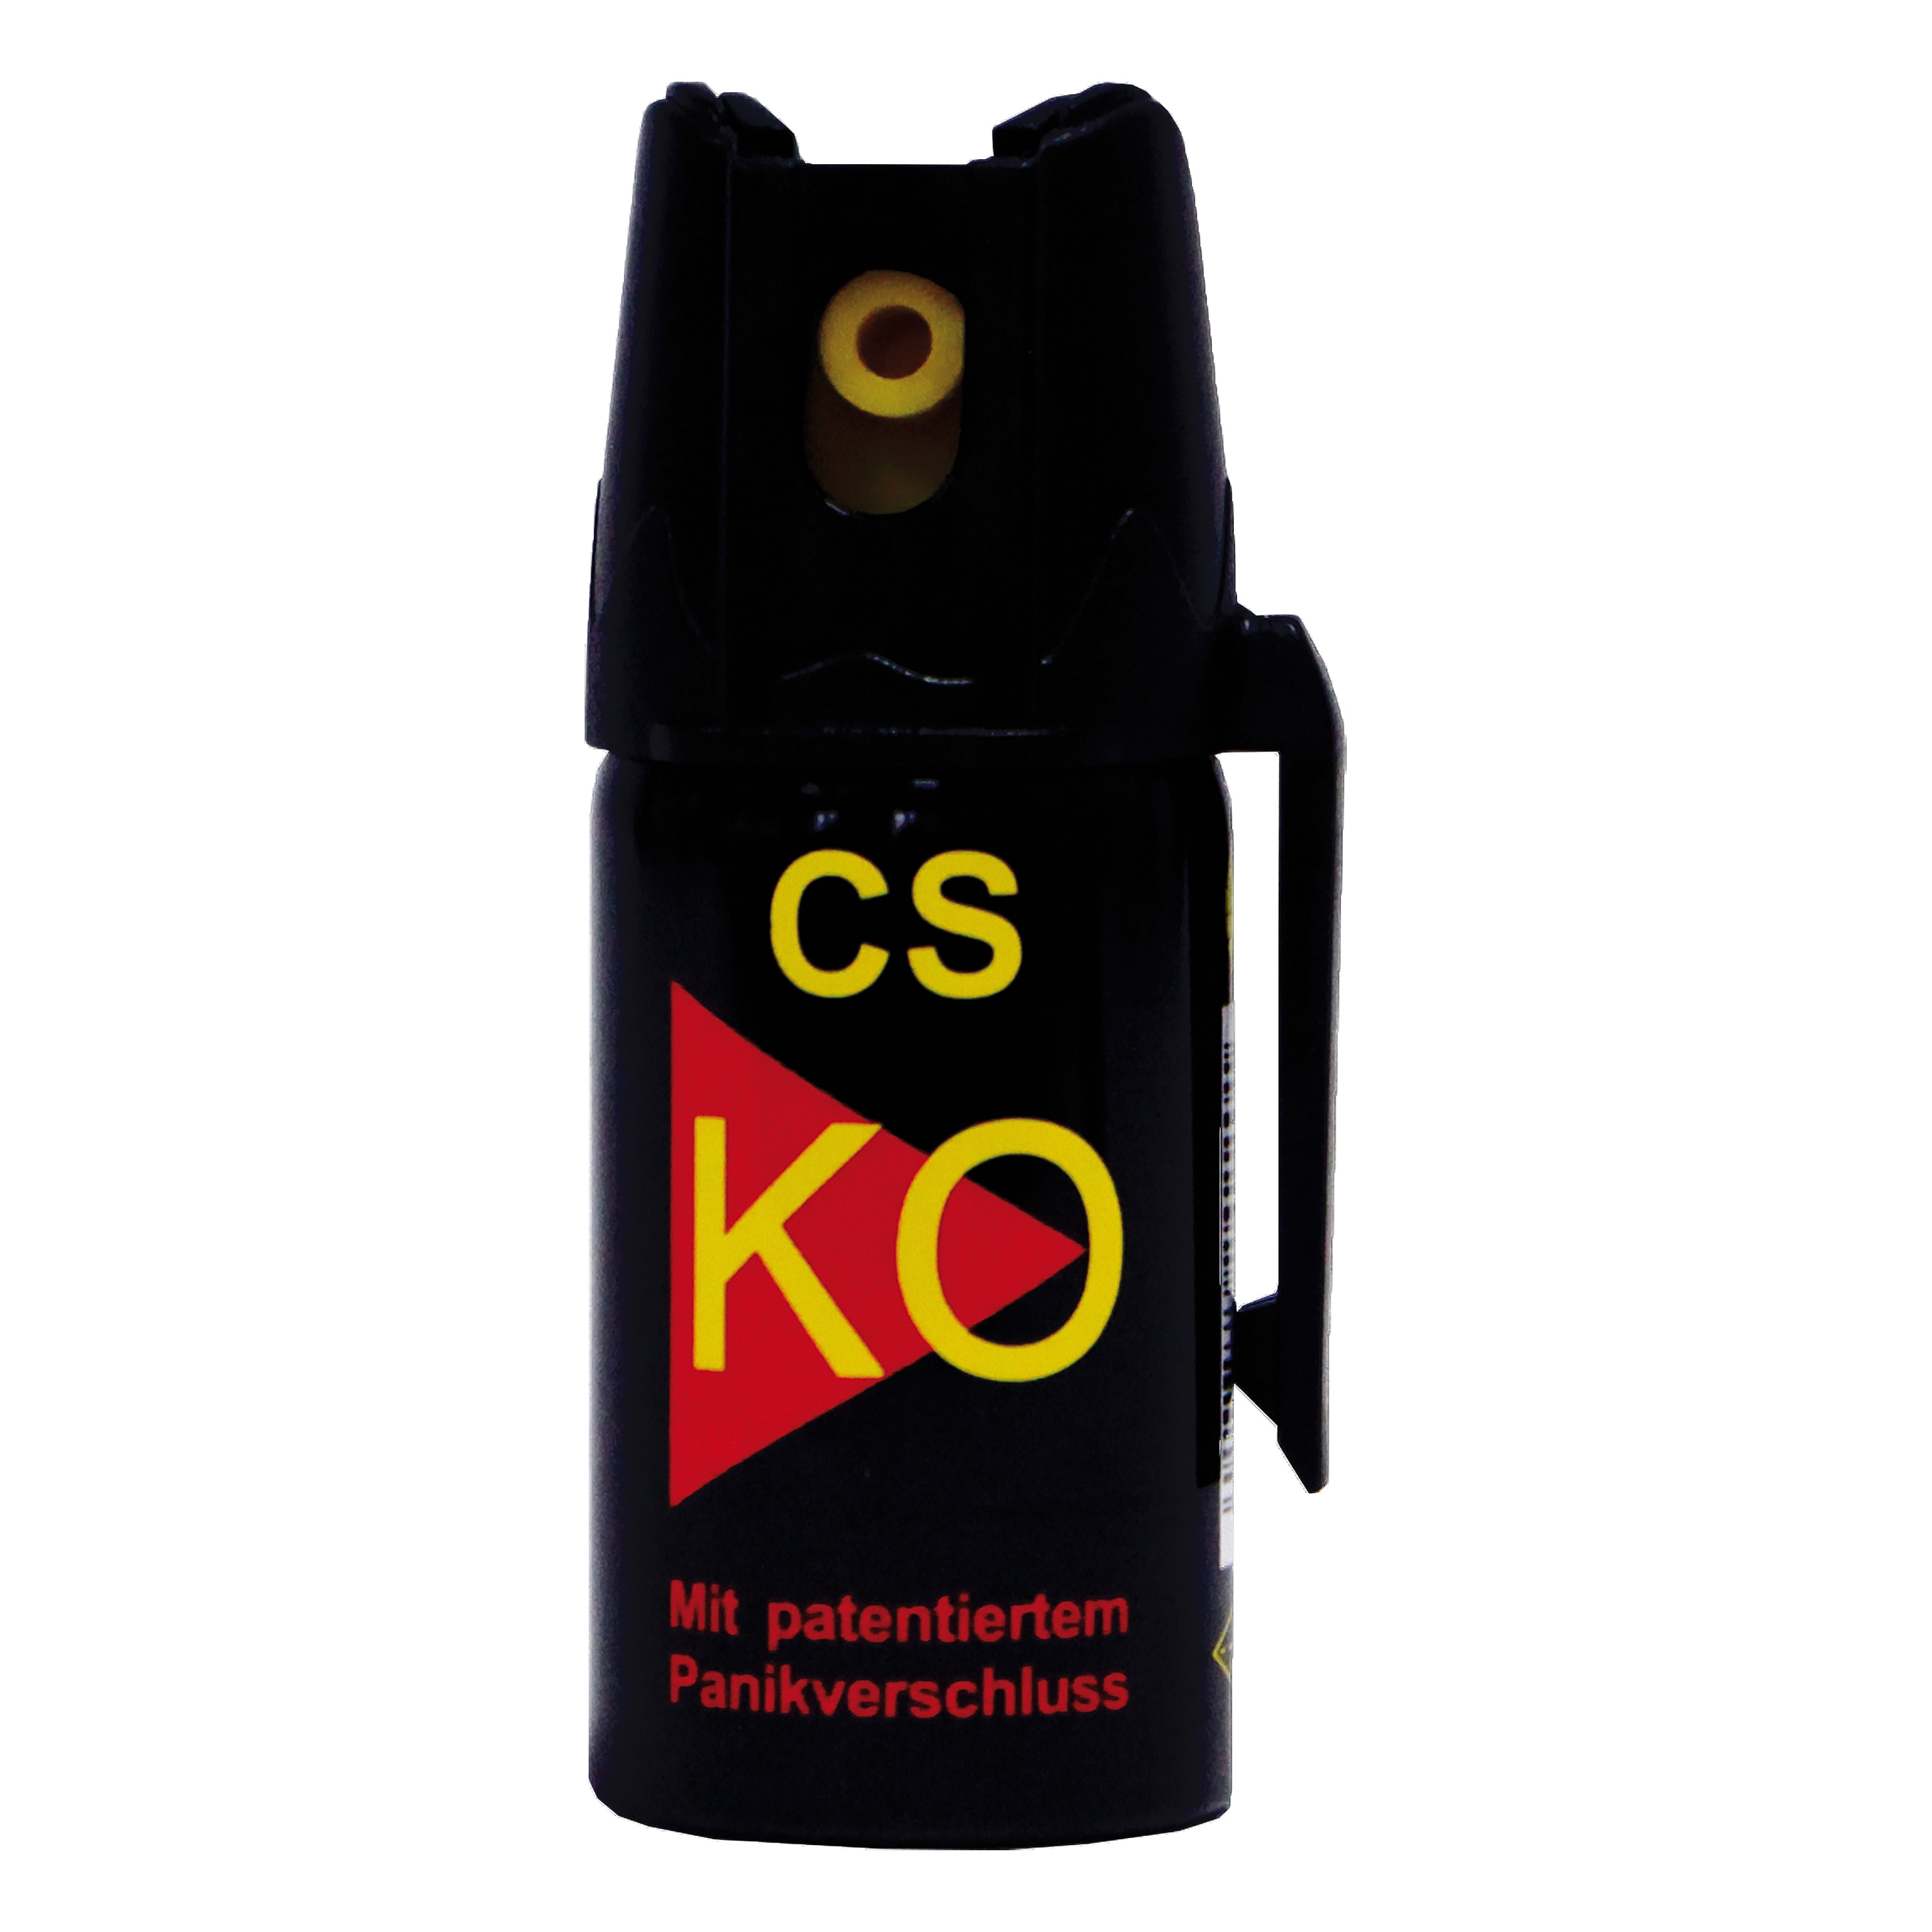 Comprar Spray de defensa CS KO 50 ml en ASMC